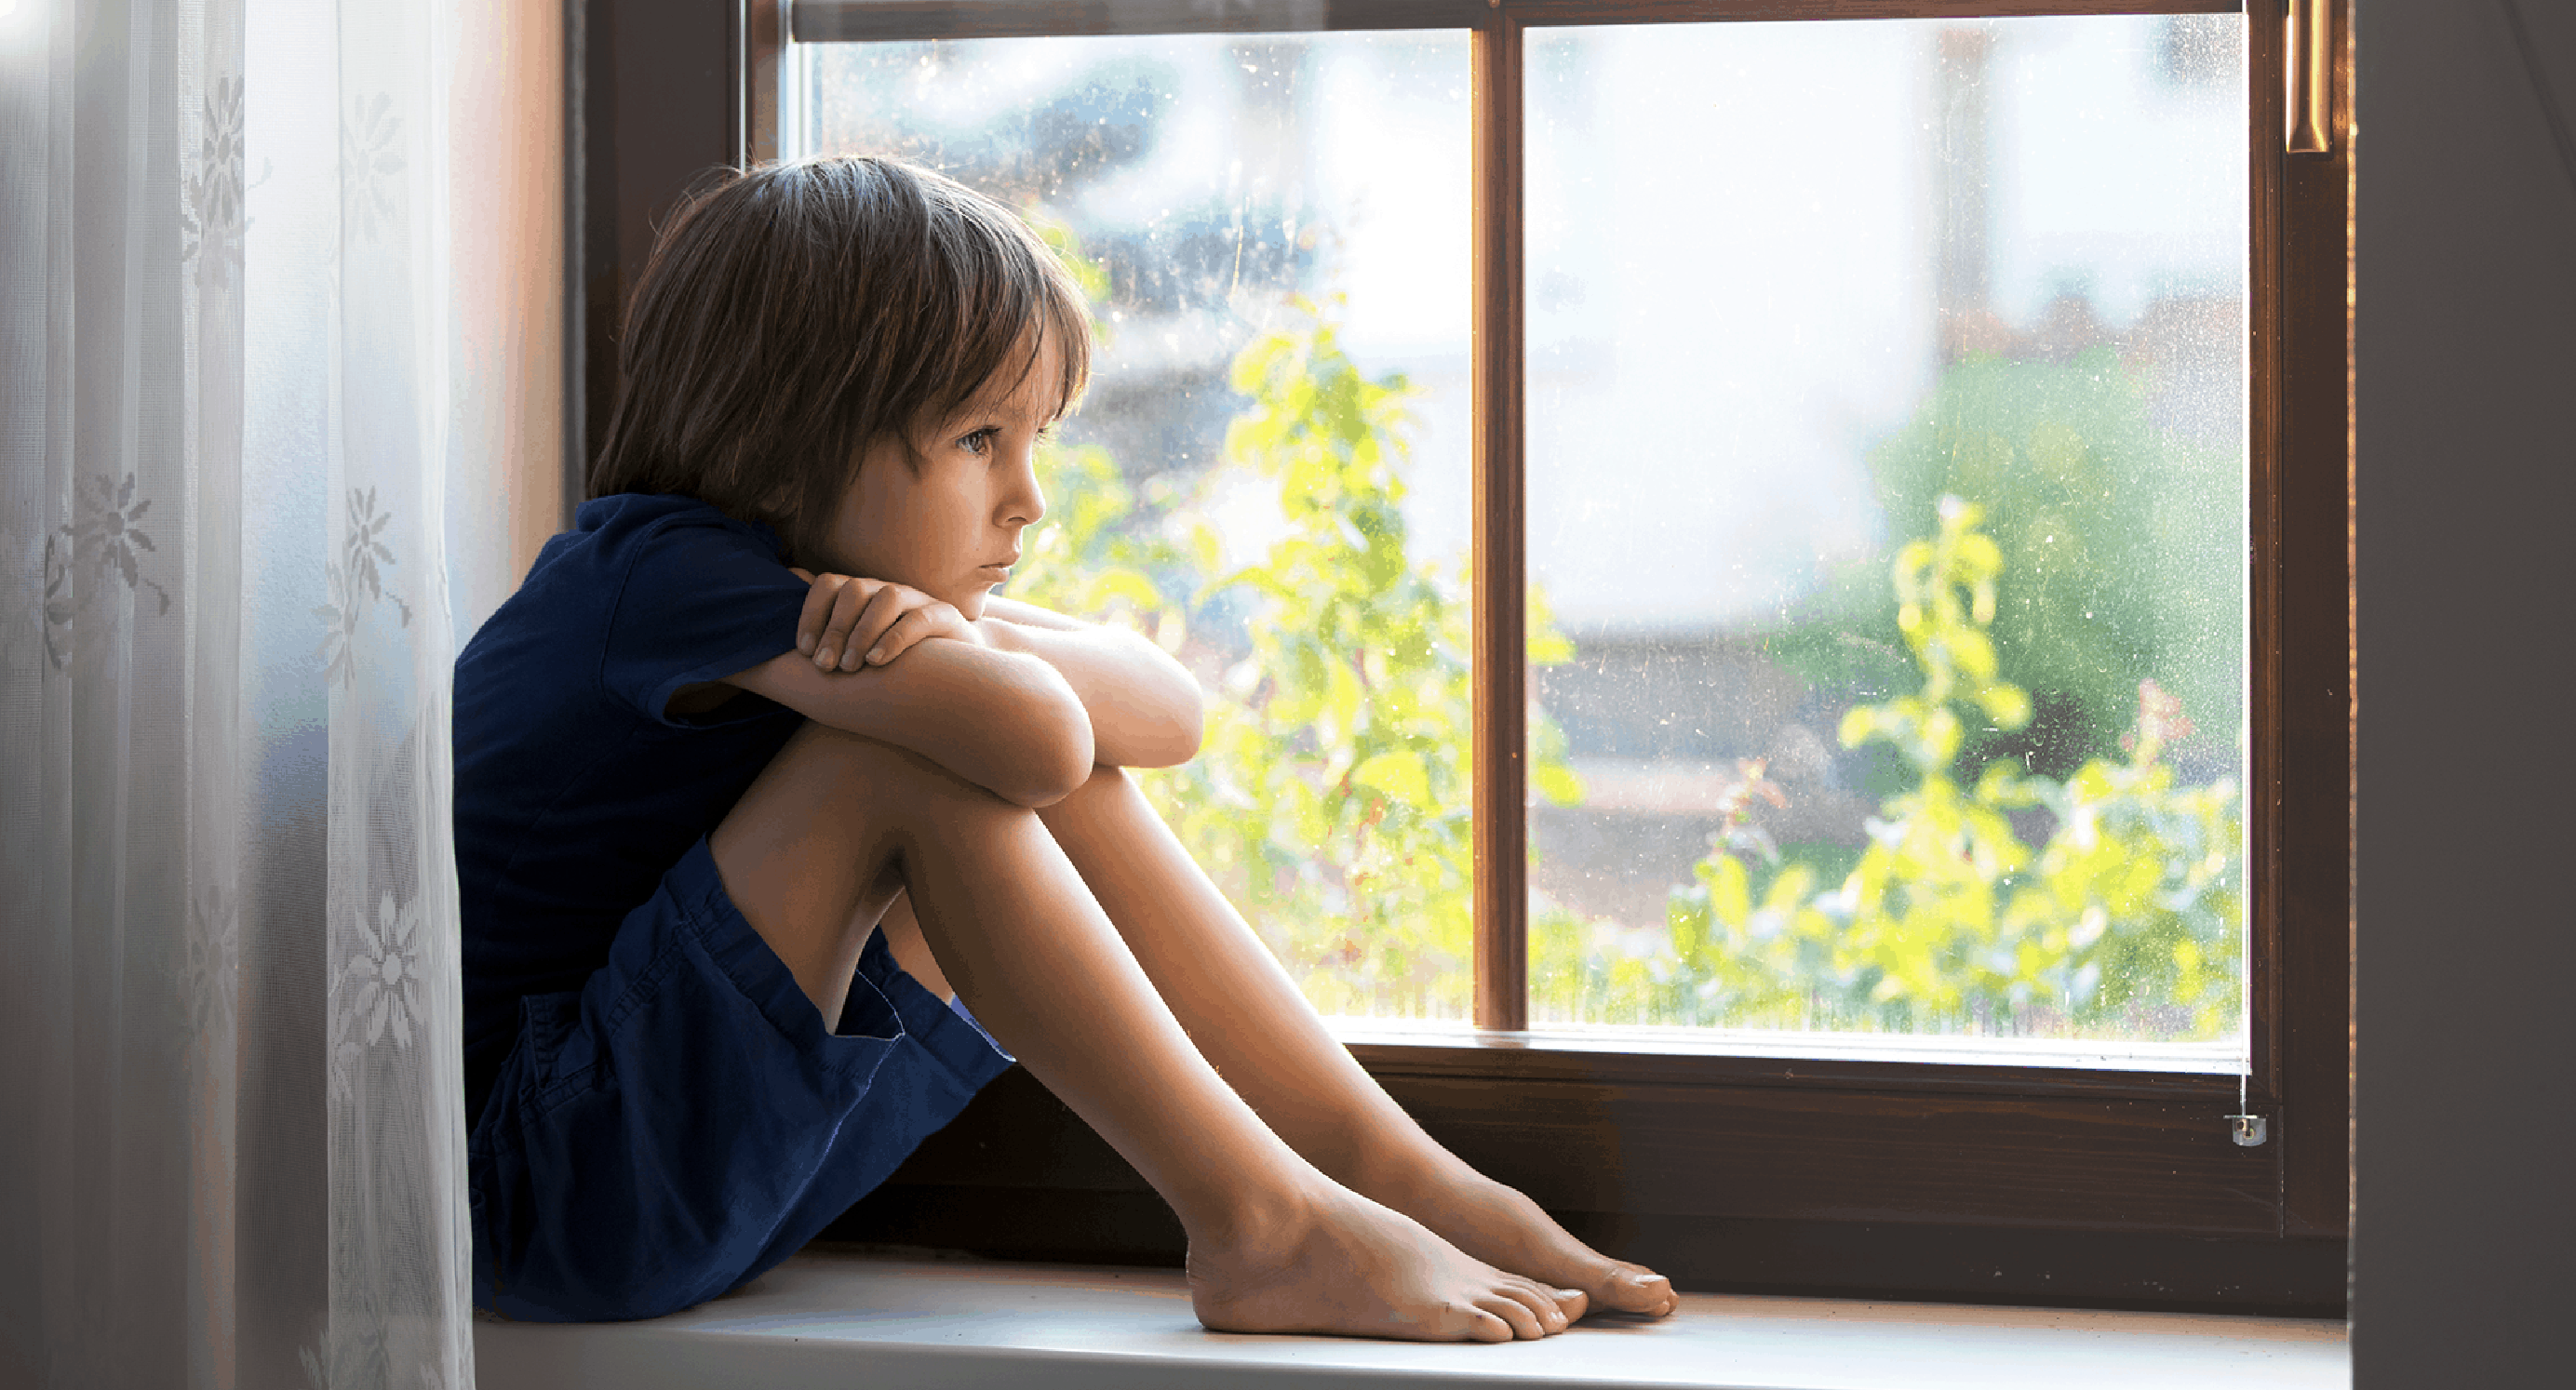 Understanding Children’s Emotions